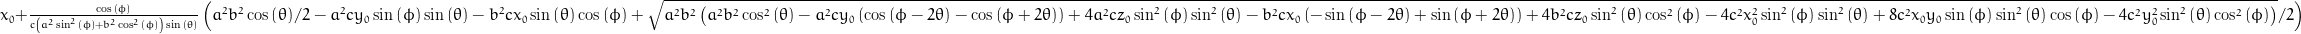 x_{0} + \frac{\cos{\left (\phi \right )}}{c \left(a^{2} \sin^{2}{\left (\phi \right )} + b^{2} \cos^{2}{\left (\phi \right )}\right) \sin{\left (\theta \right )}} \left(\frac{a^{2} b^{2}}{2} \cos{\left (\theta \right )} - a^{2} c y_{0} \sin{\left (\phi \right )} \sin{\left (\theta \right )} - b^{2} c x_{0} \sin{\left (\theta \right )} \cos{\left (\phi \right )} + \frac{1}{2} \sqrt{a^{2} b^{2} \left(a^{2} b^{2} \cos^{2}{\left (\theta \right )} - a^{2} c y_{0} \left(\cos{\left (\phi - 2 \theta \right )} - \cos{\left (\phi + 2 \theta \right )}\right) + 4 a^{2} c z_{0} \sin^{2}{\left (\phi \right )} \sin^{2}{\left (\theta \right )} - b^{2} c x_{0} \left(- \sin{\left (\phi - 2 \theta \right )} + \sin{\left (\phi + 2 \theta \right )}\right) + 4 b^{2} c z_{0} \sin^{2}{\left (\theta \right )} \cos^{2}{\left (\phi \right )} - 4 c^{2} x_{0}^{2} \sin^{2}{\left (\phi \right )} \sin^{2}{\left (\theta \right )} + 8 c^{2} x_{0} y_{0} \sin{\left (\phi \right )} \sin^{2}{\left (\theta \right )} \cos{\left (\phi \right )} - 4 c^{2} y_{0}^{2} \sin^{2}{\left (\theta \right )} \cos^{2}{\left (\phi \right )}\right)}\right)